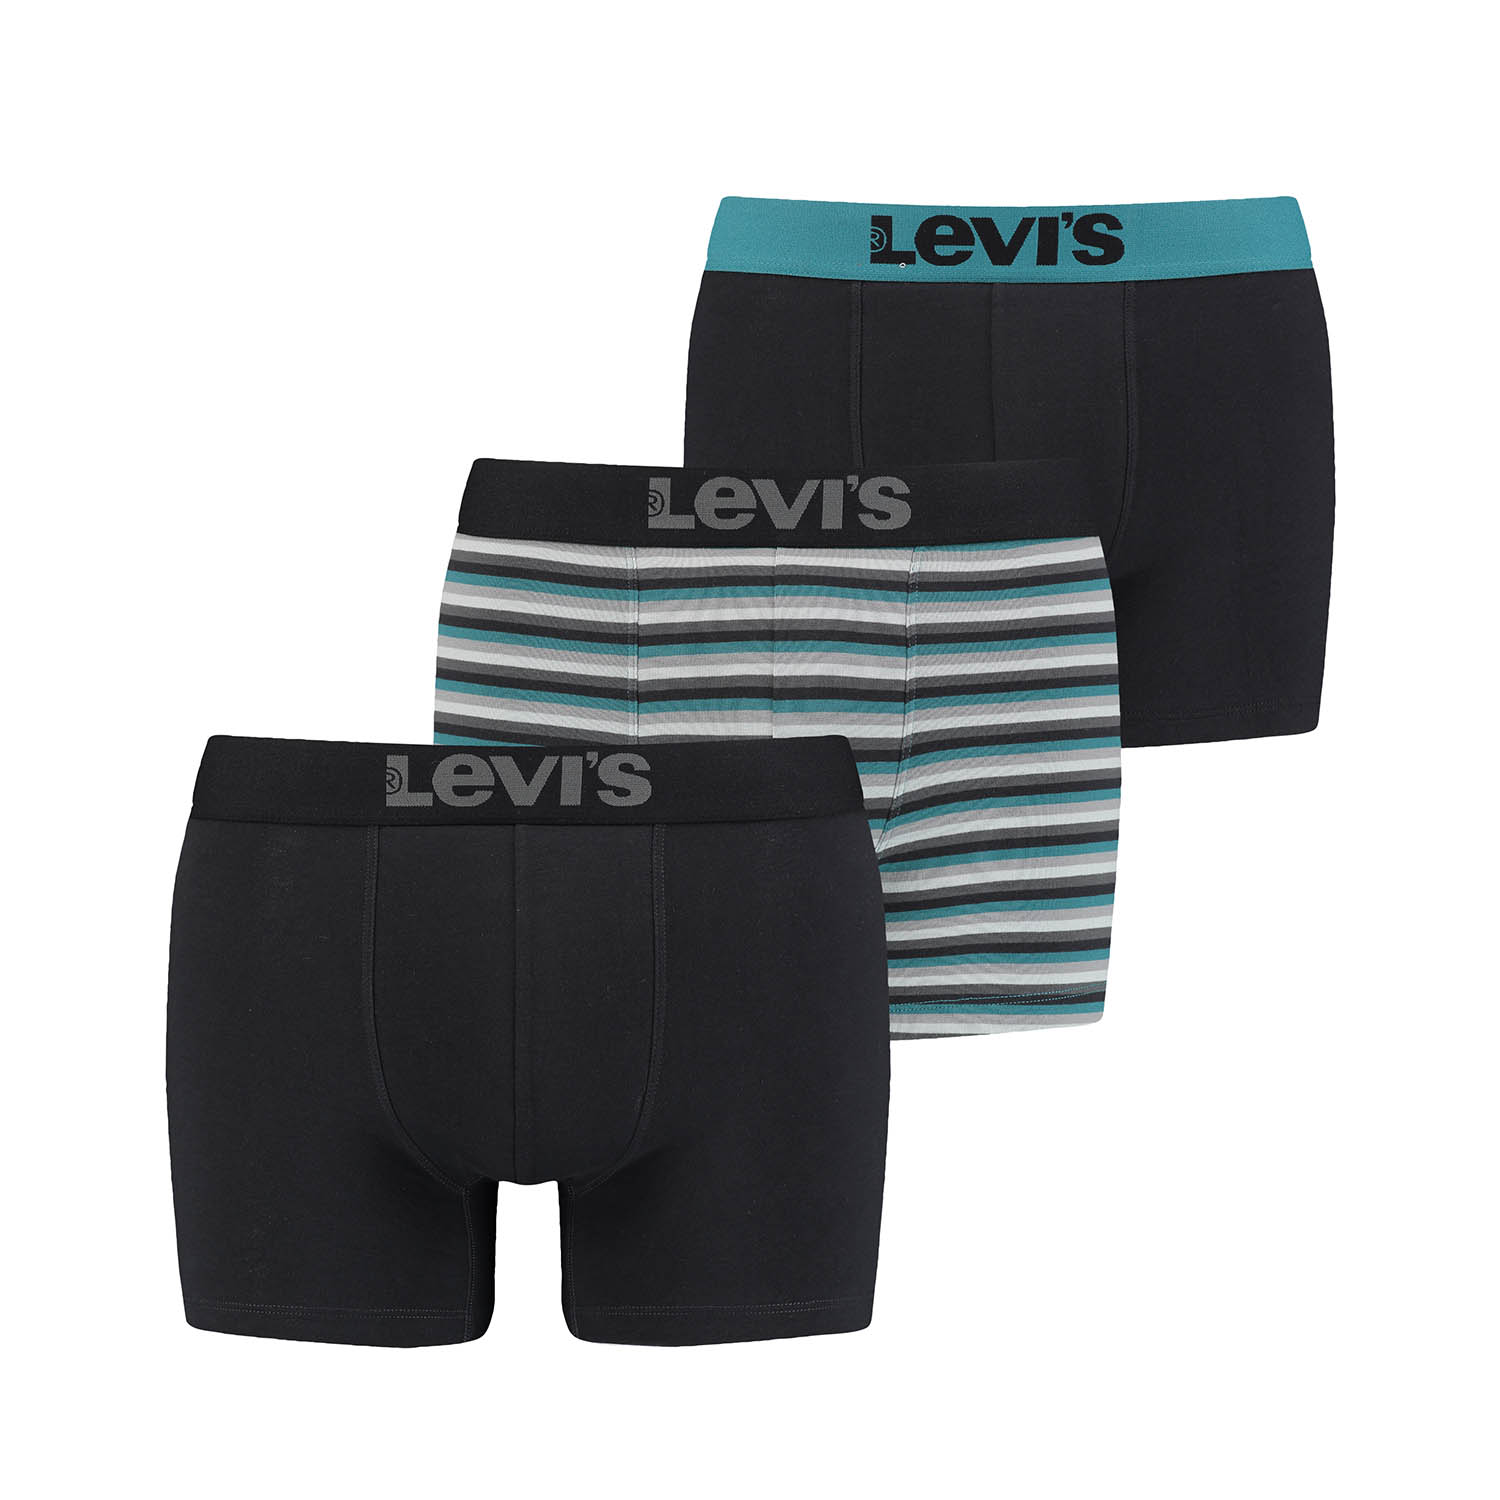 Levi's Mens Yarn-Dyed Multicolour Stripe Men's Briefs Giftbox Boxer Shorts, 3er Pack, Black Combo, M